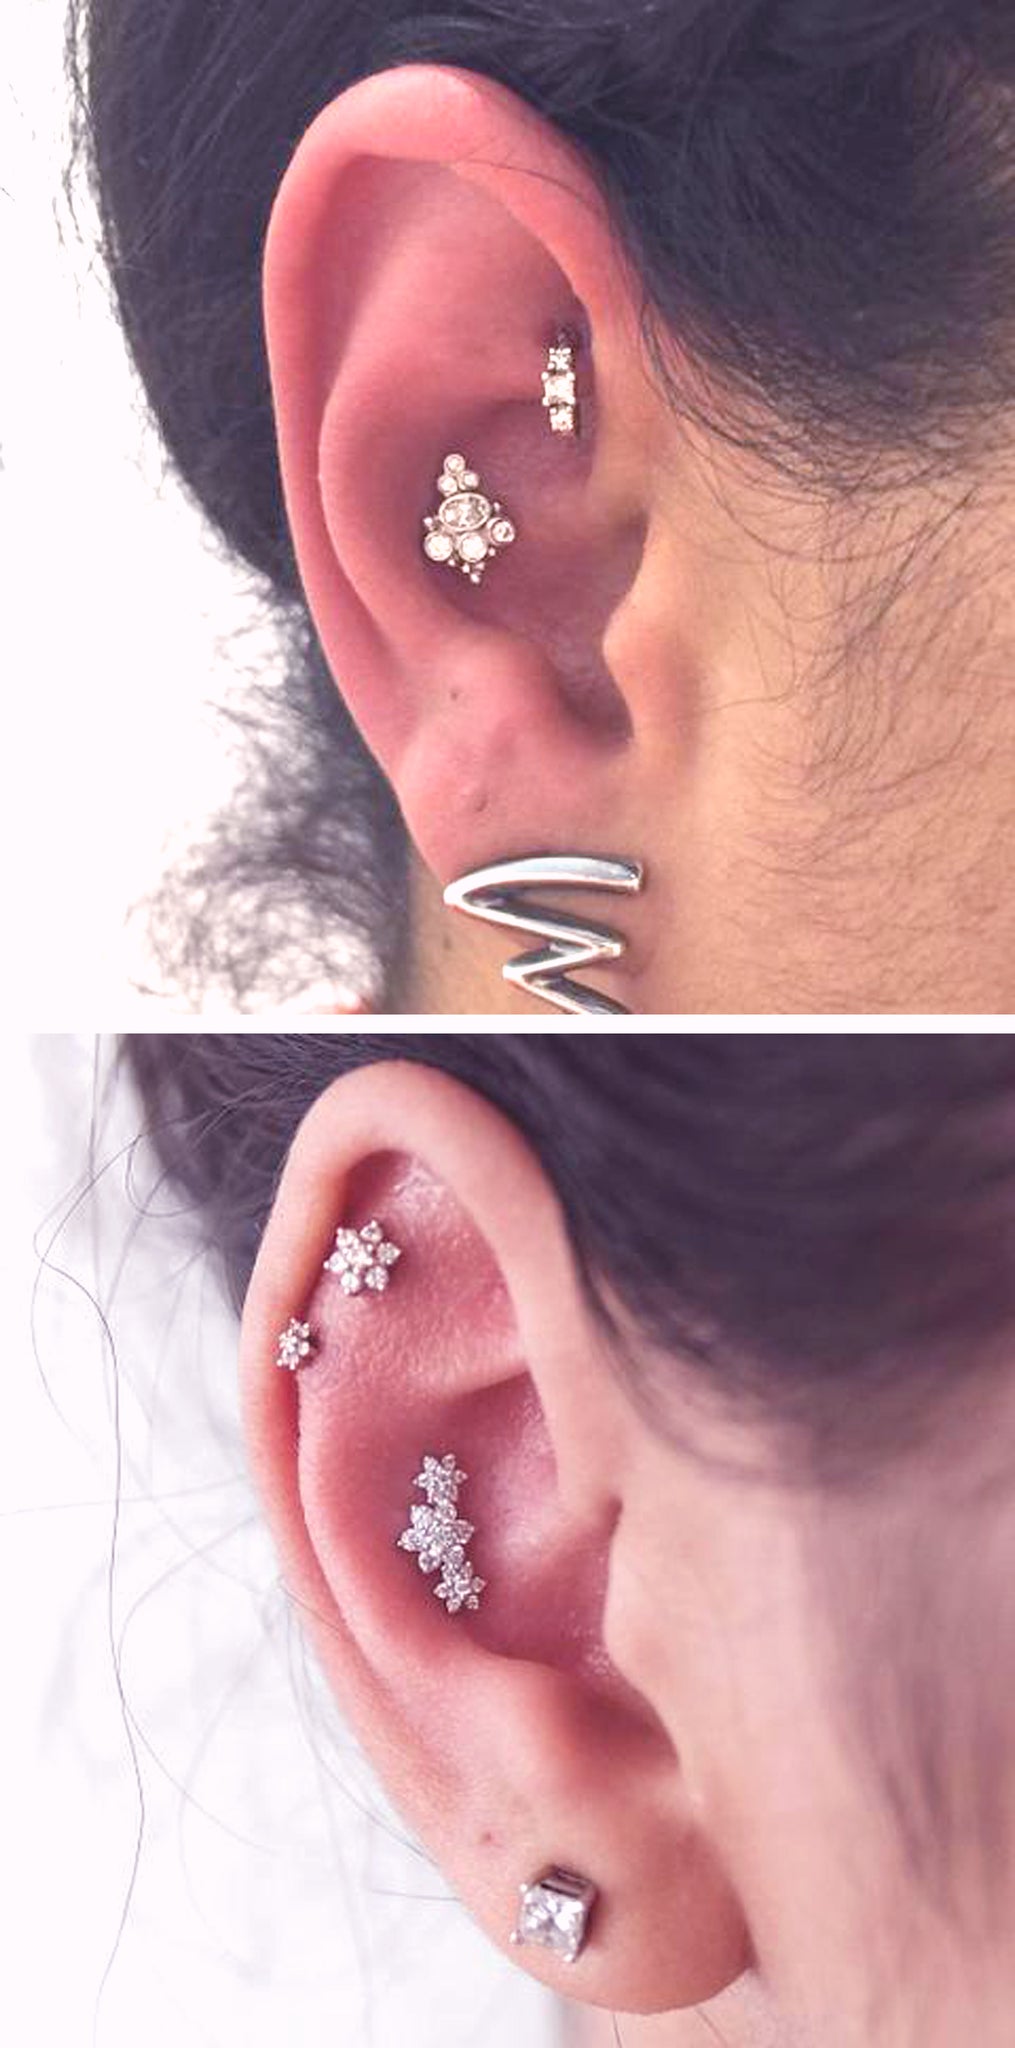 Unique Pretty Multiple Ear Piercing Ideas - Flower Cartilage Earring Studs - Rook Hoop Ring - MyBodiArt.com